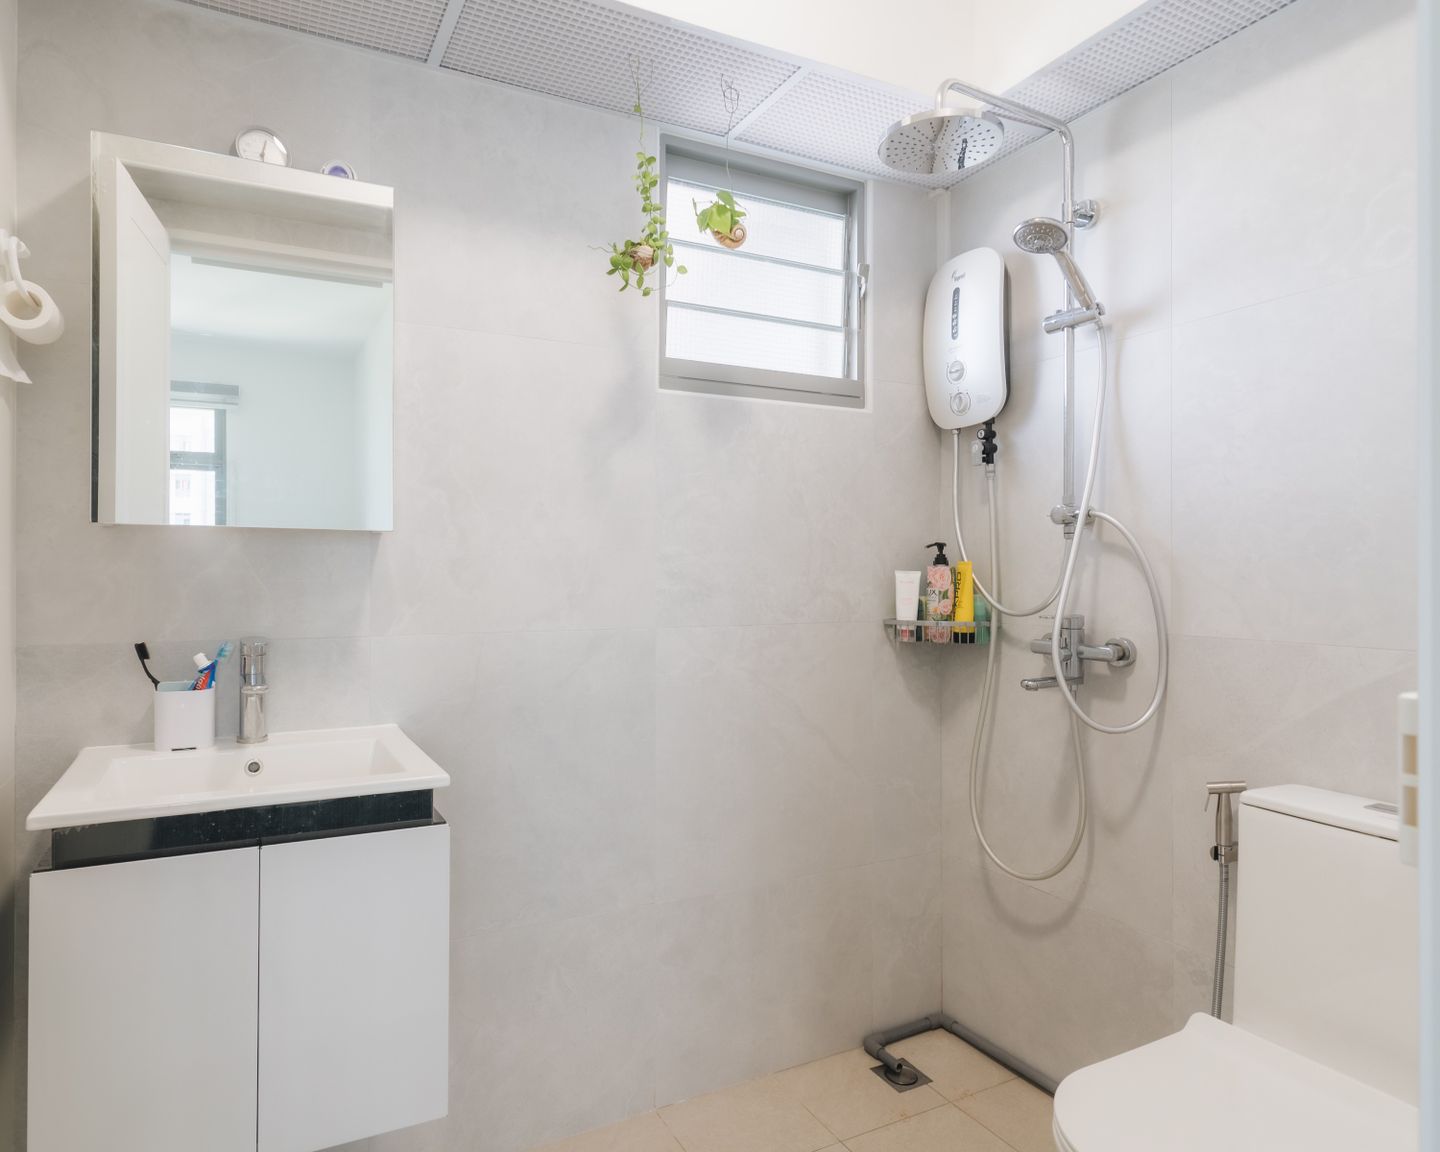 Compact Minimalistic Bathroom Design - Livspace